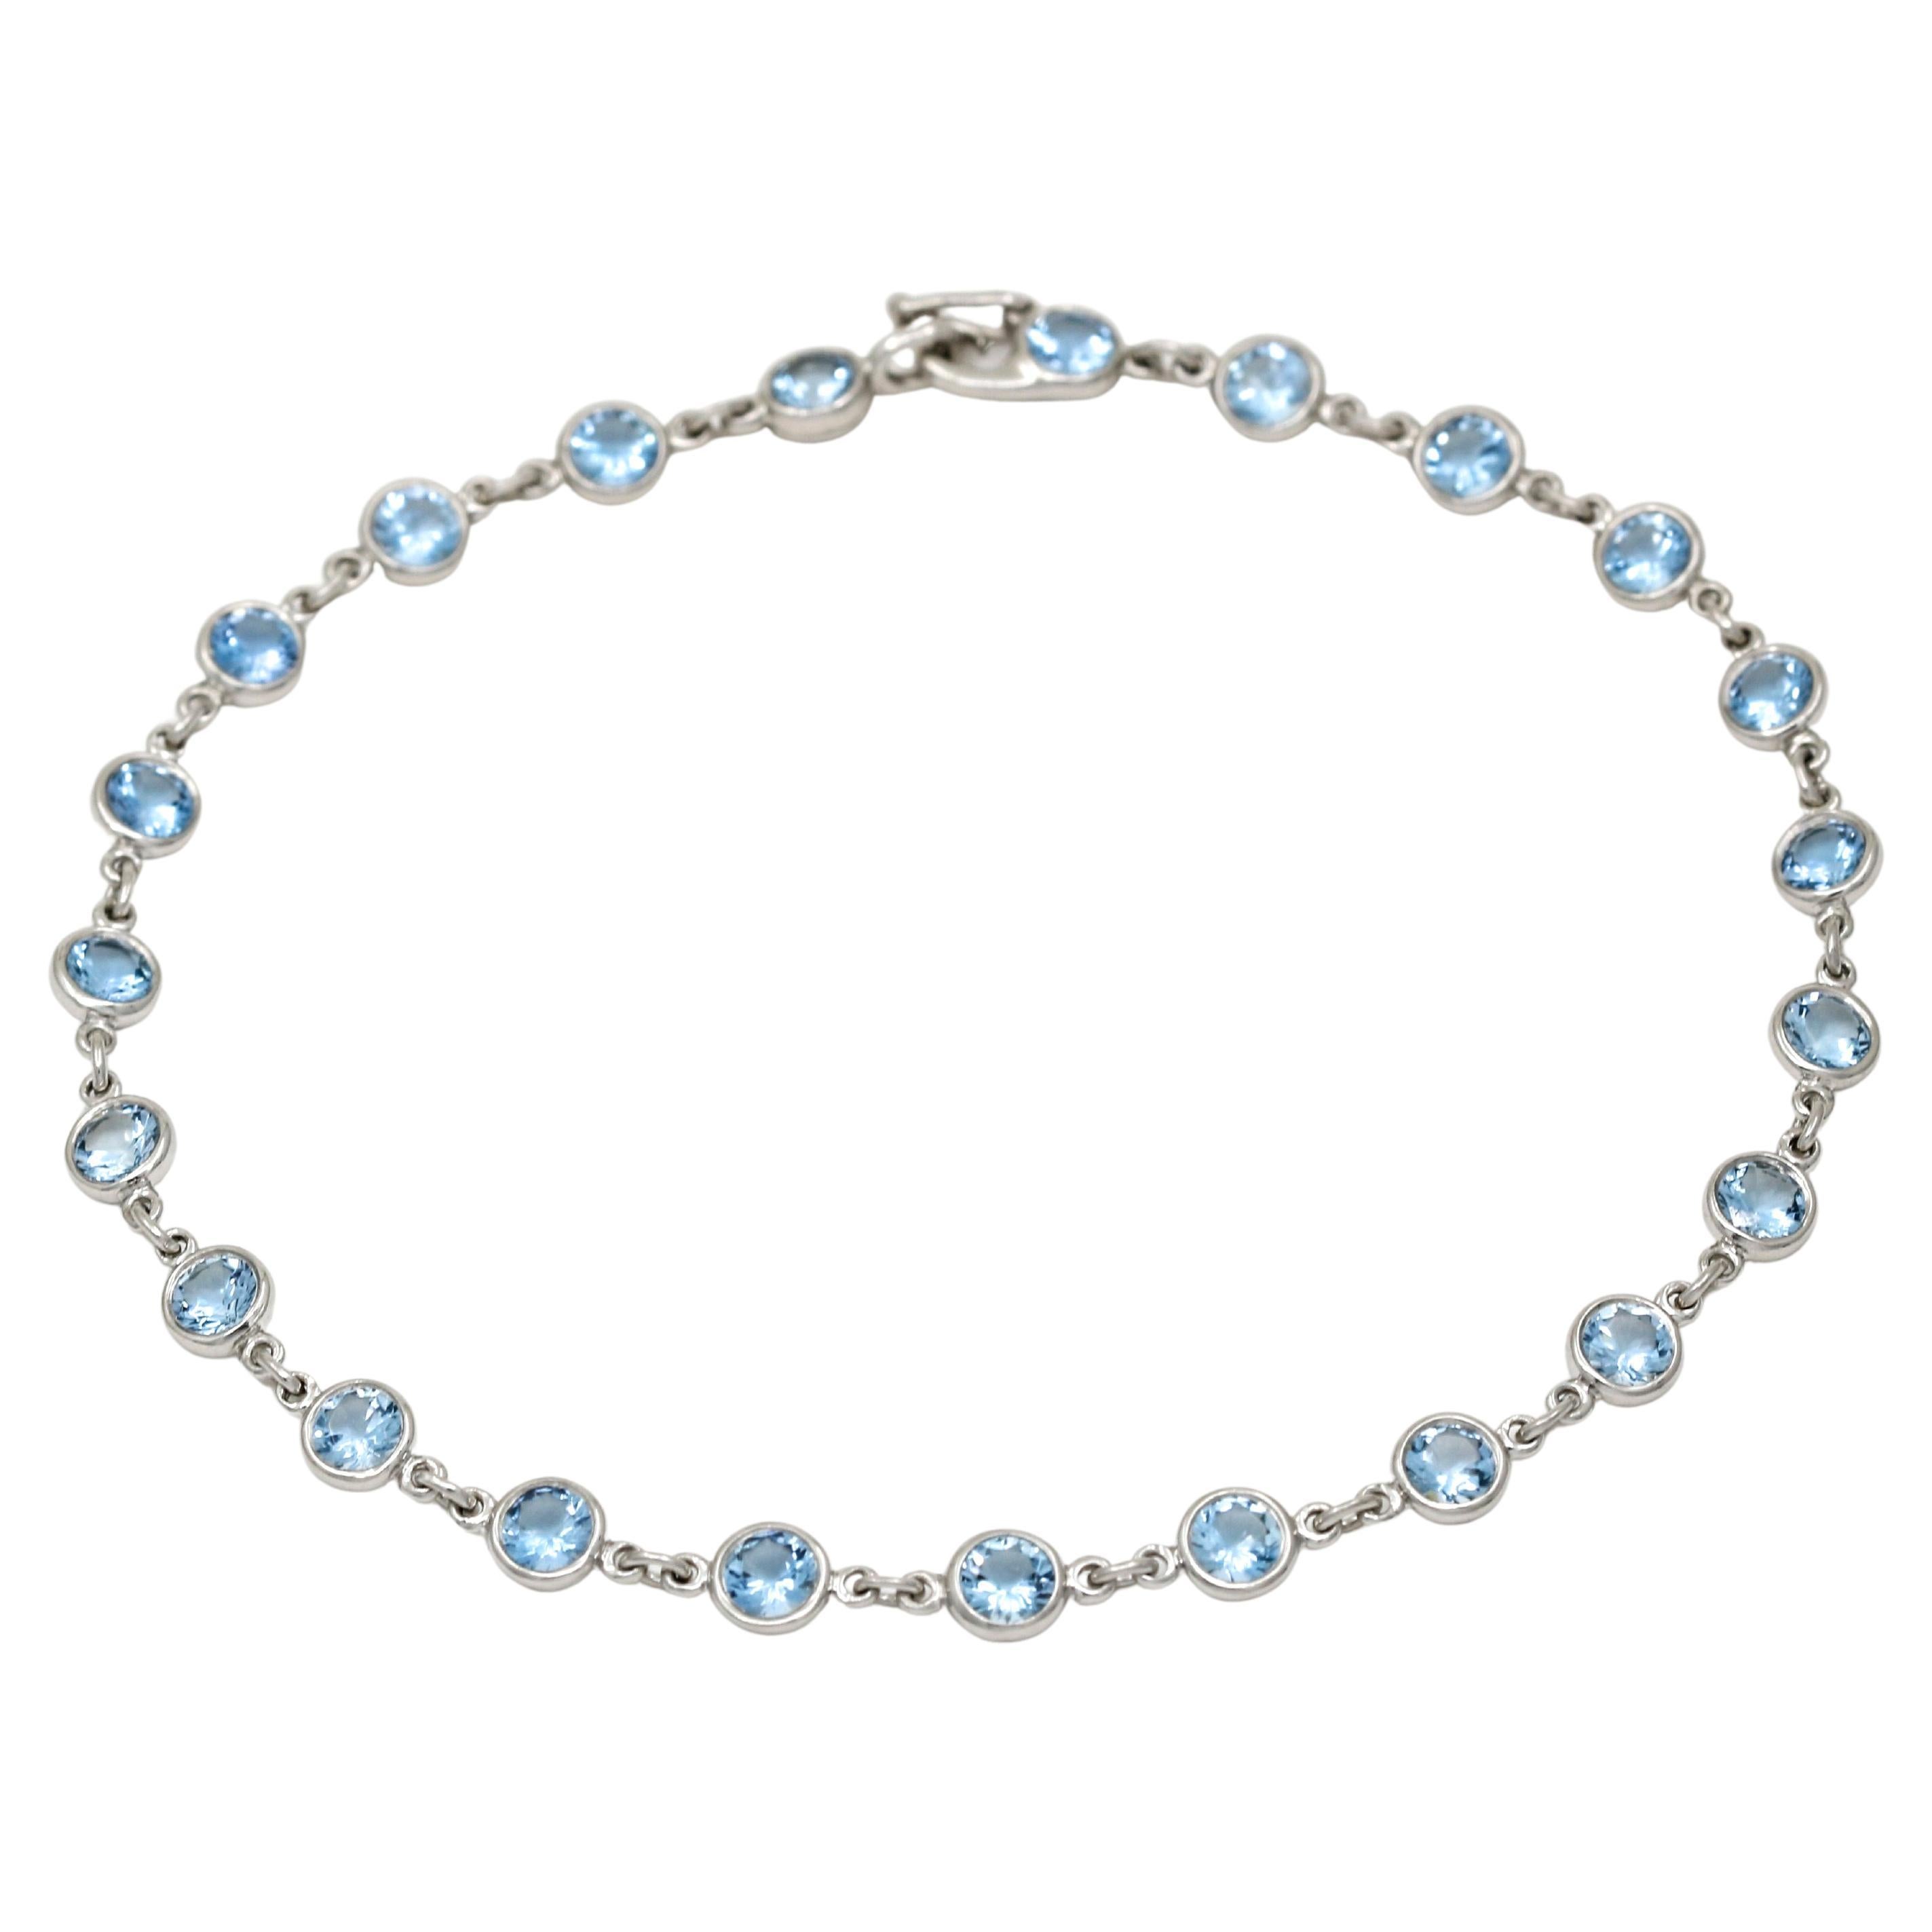 Rare Tiffany & Co. Platinum Aquamarine Colors by the Yard Bracelet - 23 Stones